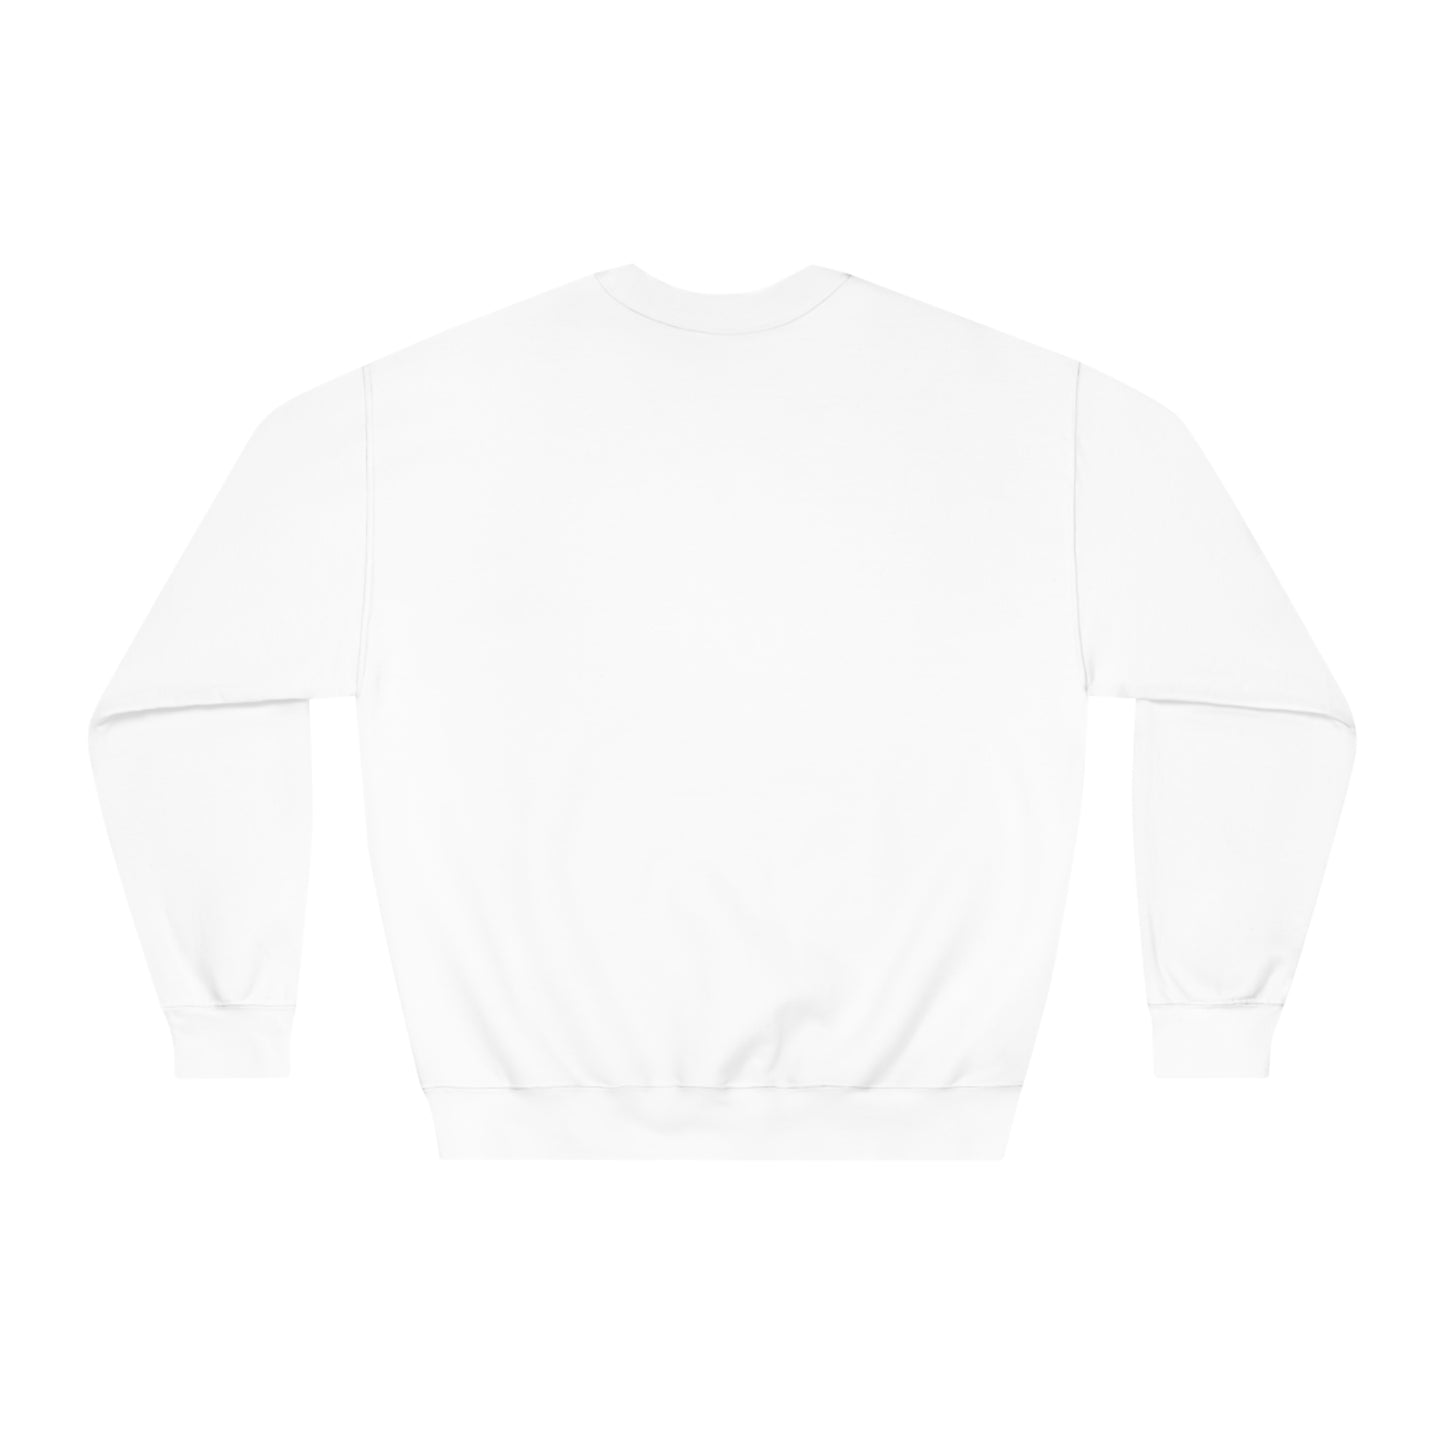 Golf Cutout - Gildan Unisex DryBlend® Crewneck Sweatshirt